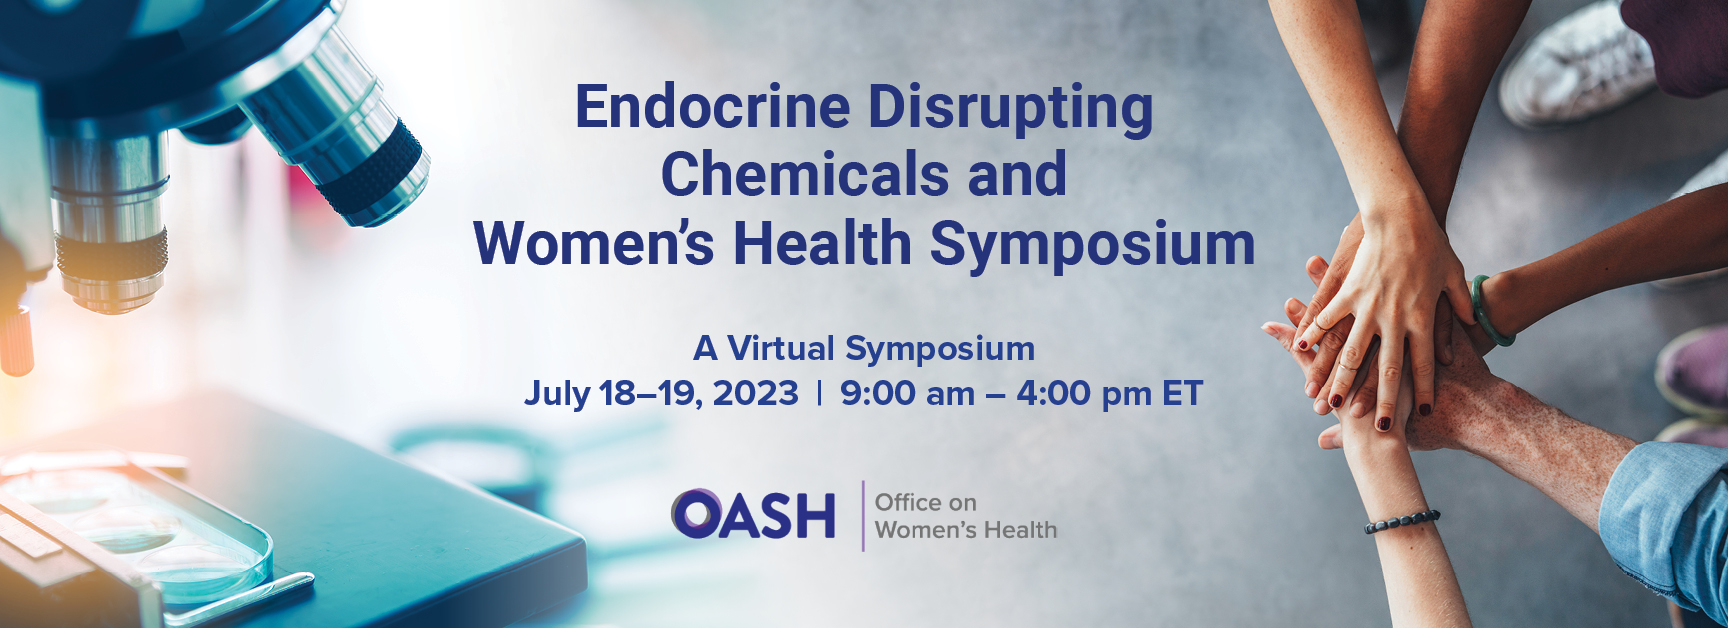 Endocrine Disrupting Chemicals and Women's Health Symposium